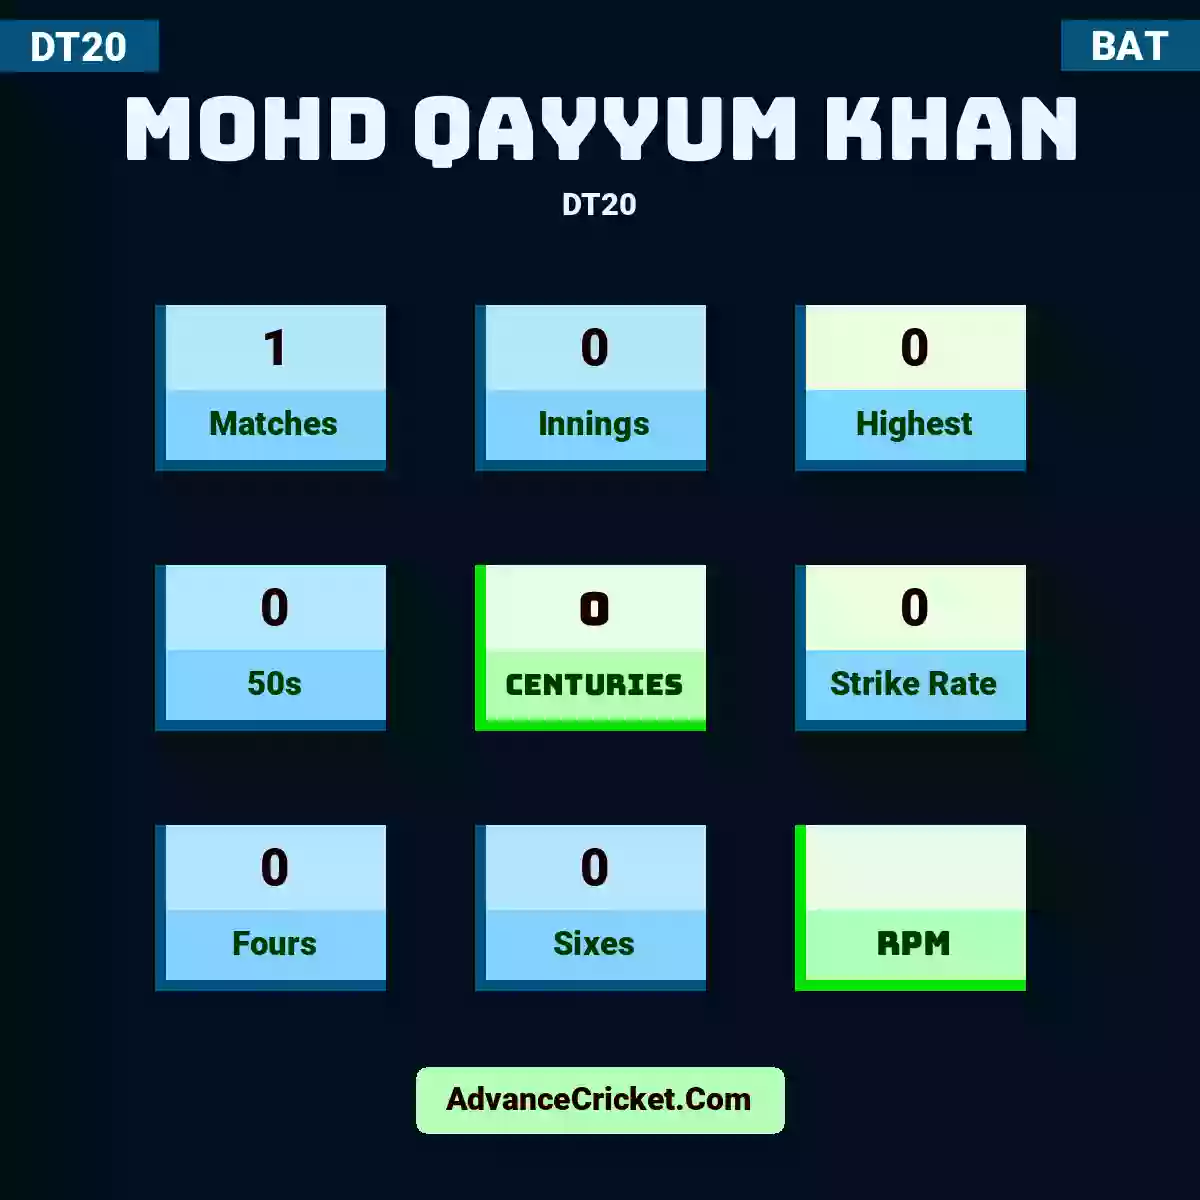 Mohd Qayyum Khan DT20 , Mohd Qayyum Khan played 1 matches, scored 0 runs as highest, 0 half-centuries, and 0 centuries, with a strike rate of 0. M.Qayyum.Khan hit 0 fours and 0 sixes.